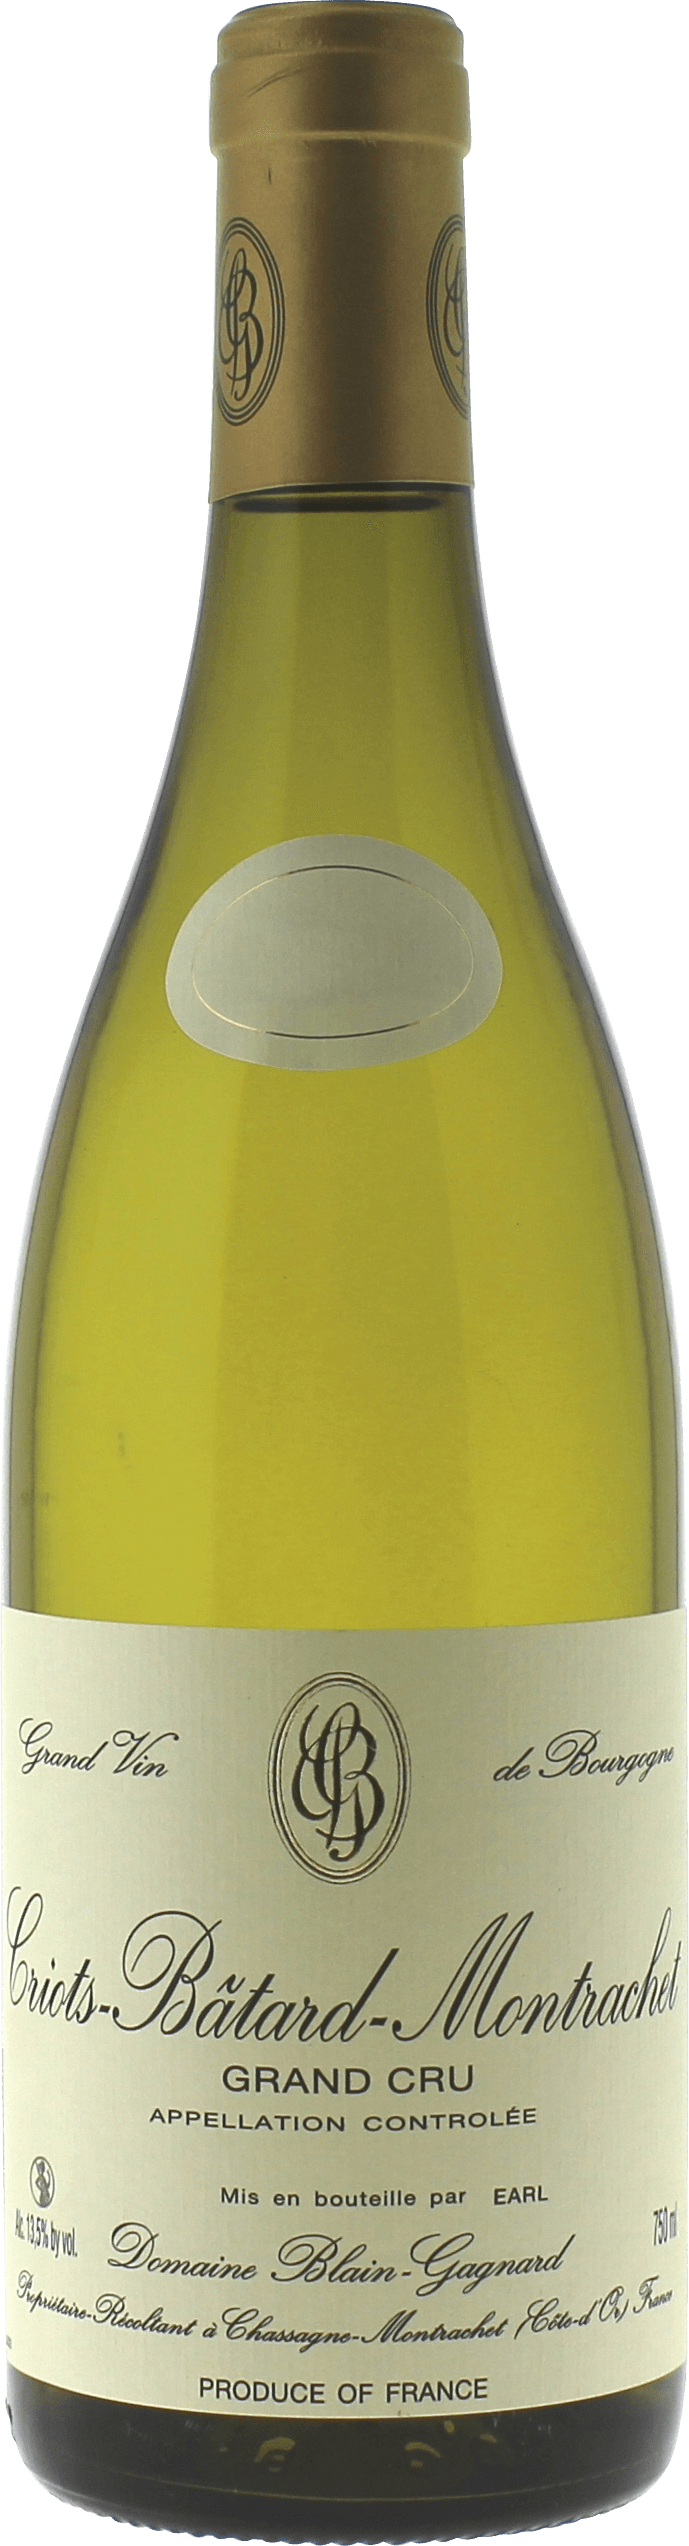 Criots-batard montrachet grand cru 2018 Domaine BLAIN GAGNARD, Bourgogne blanc